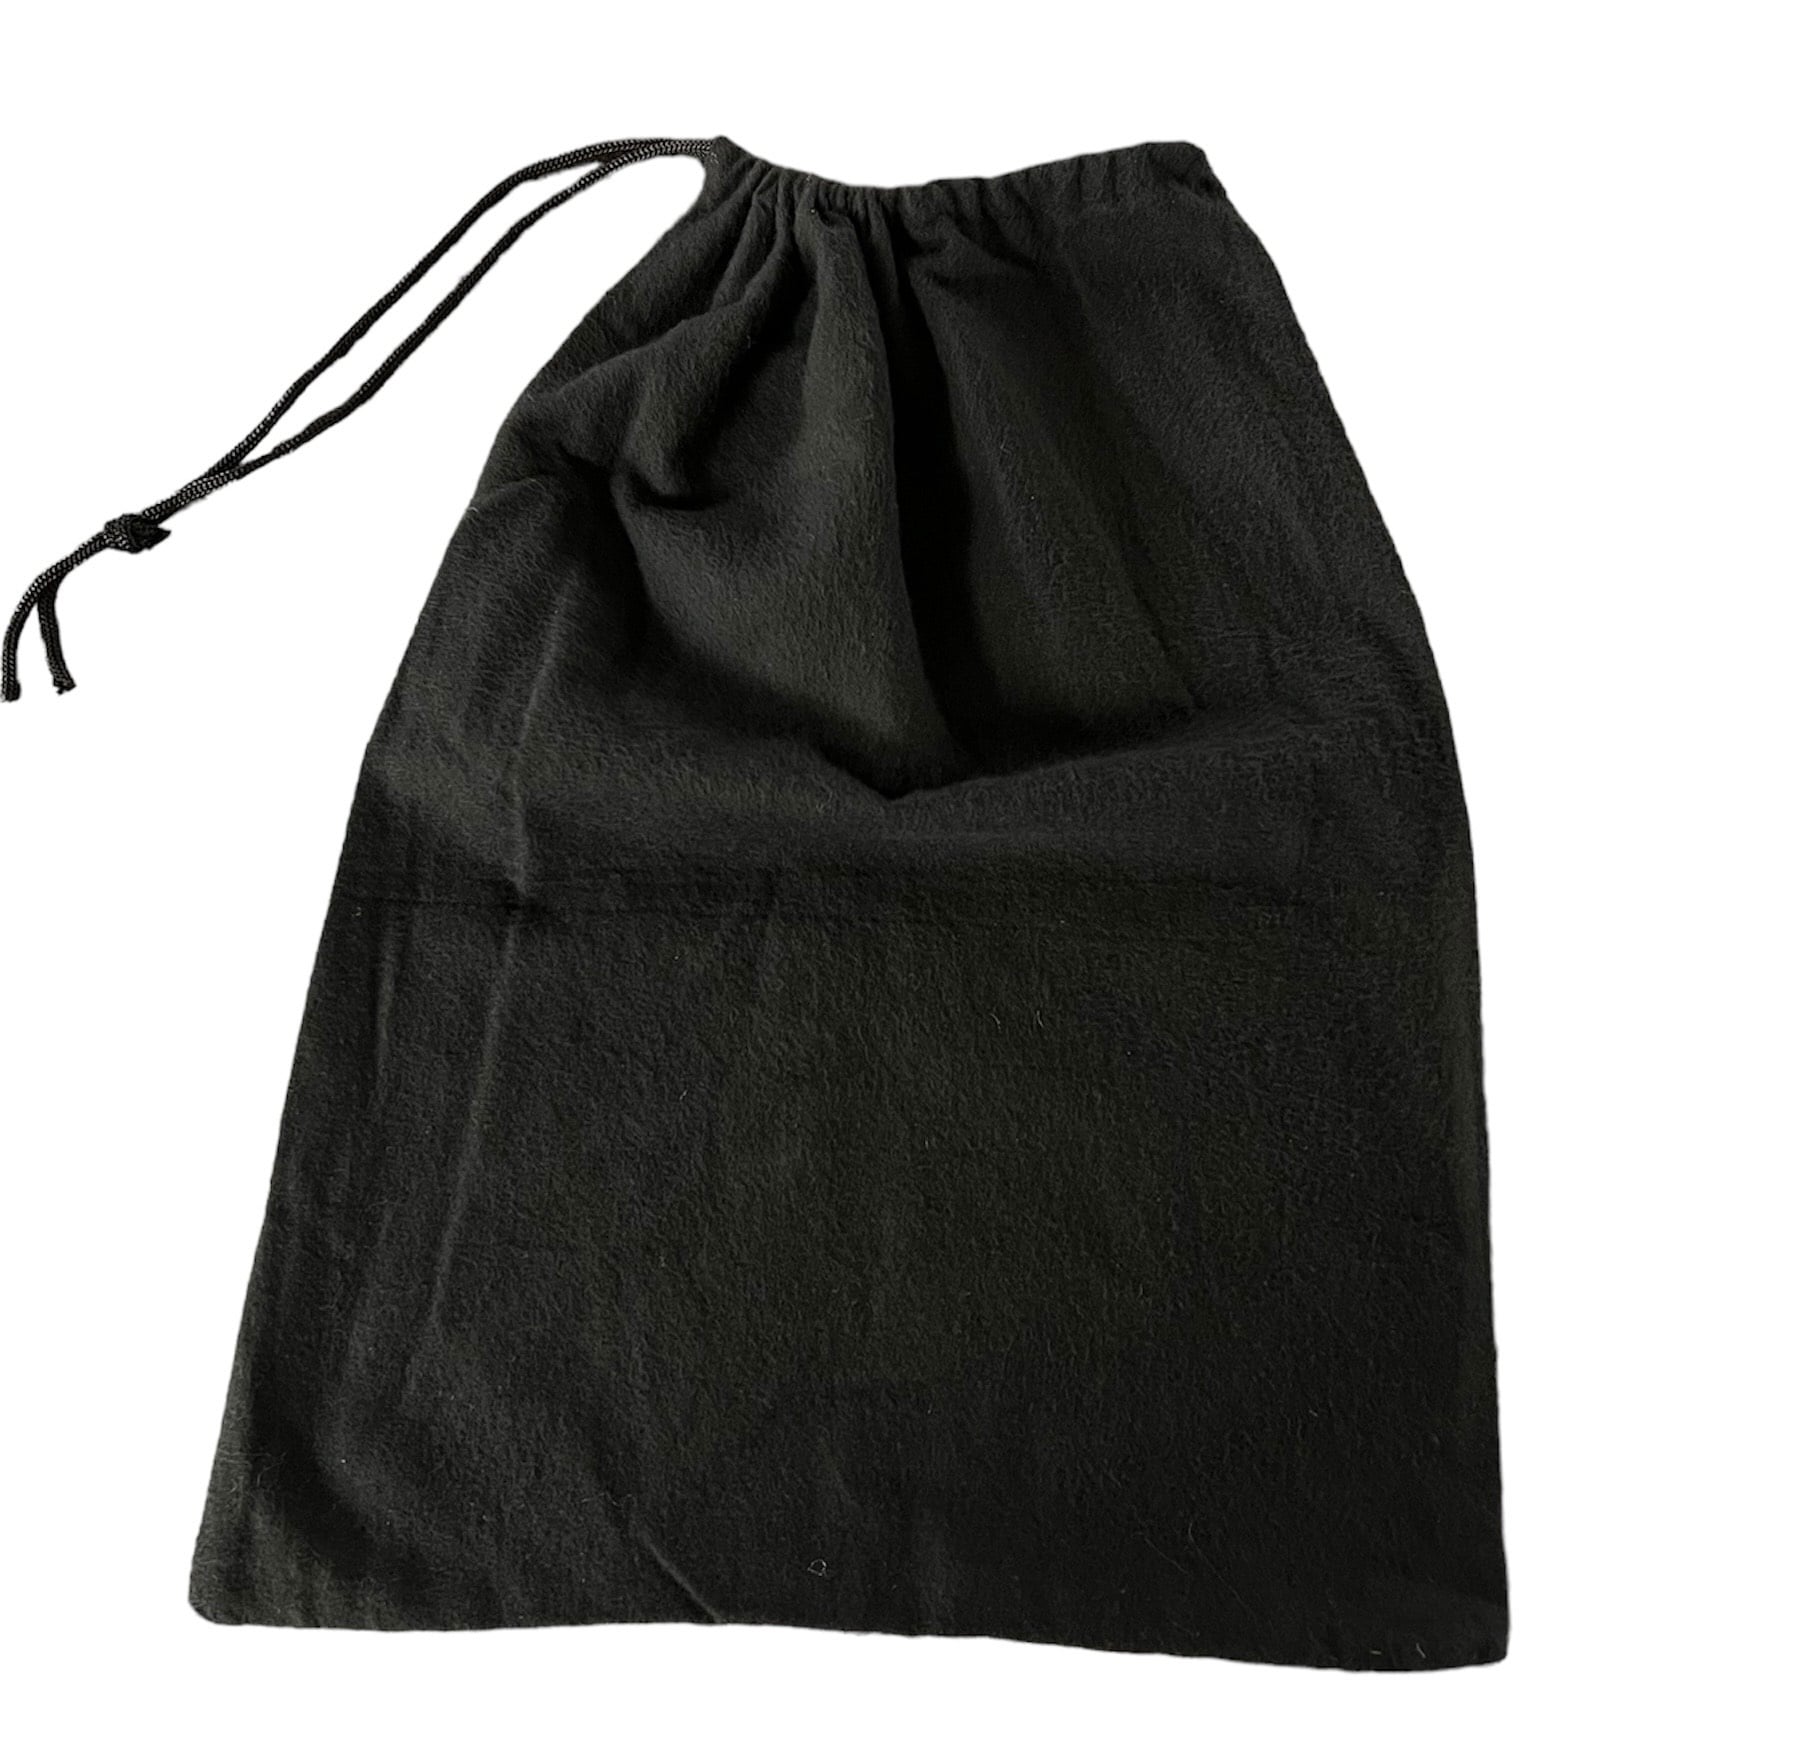 Cloth bag with drawstring 39X28 cm - Black